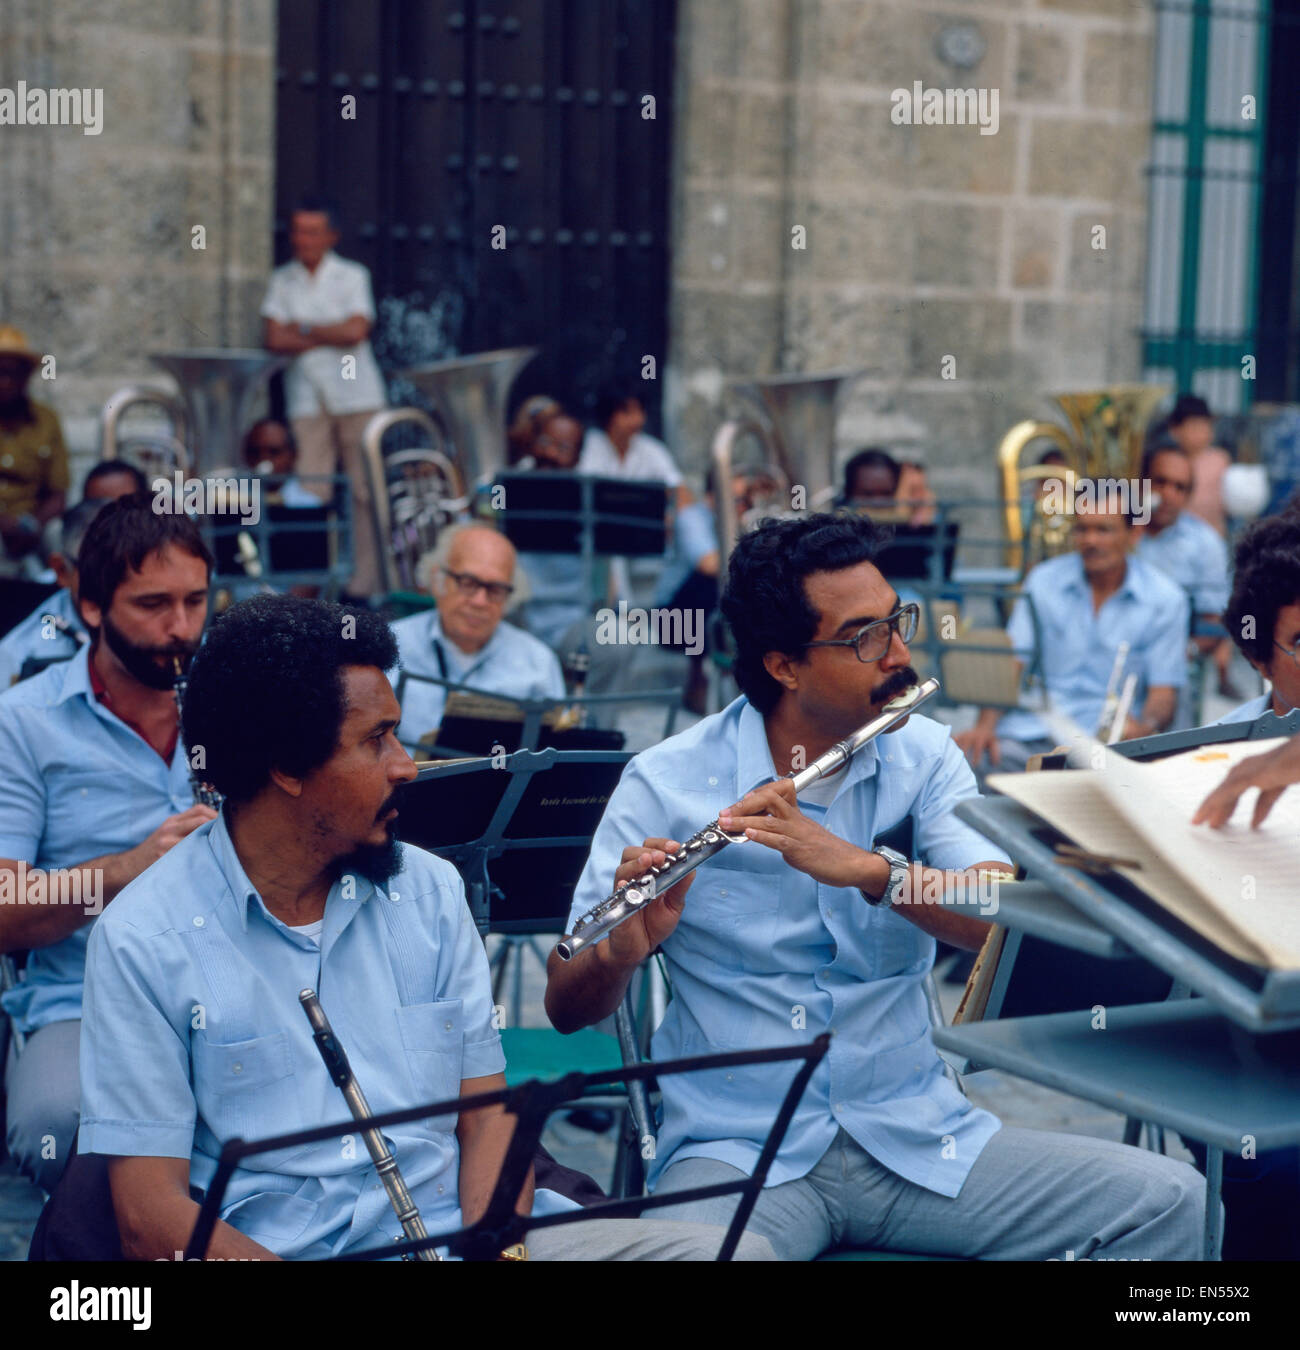 Eine Reise nach Havanna, Kuba 1980er Jahre. Un viaggio a L'Avana, Cuba degli anni ottanta. Foto Stock